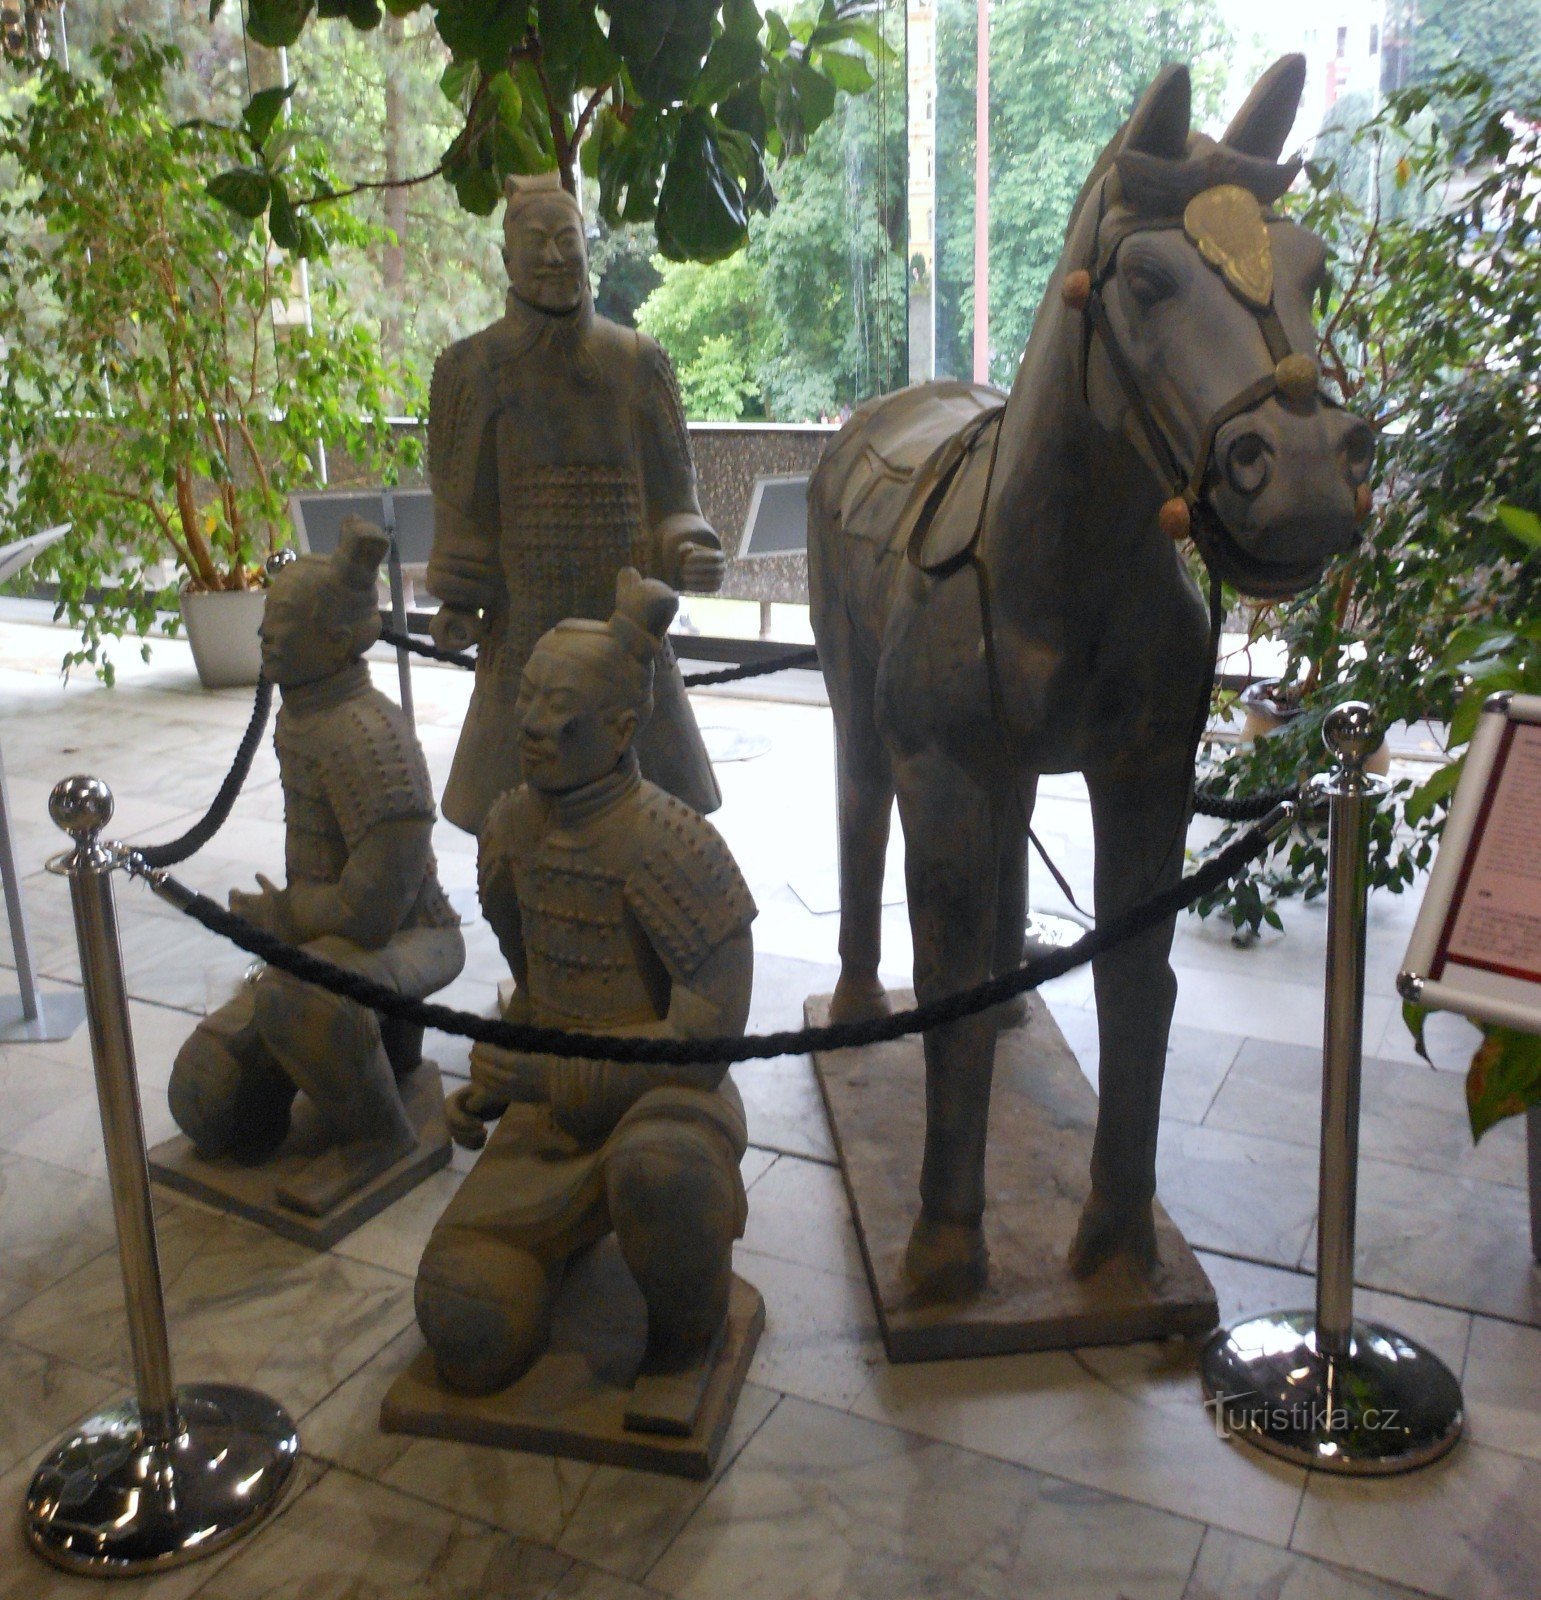 Terracotta Army στο Spa Hotel Thermal - Karlovy Vary